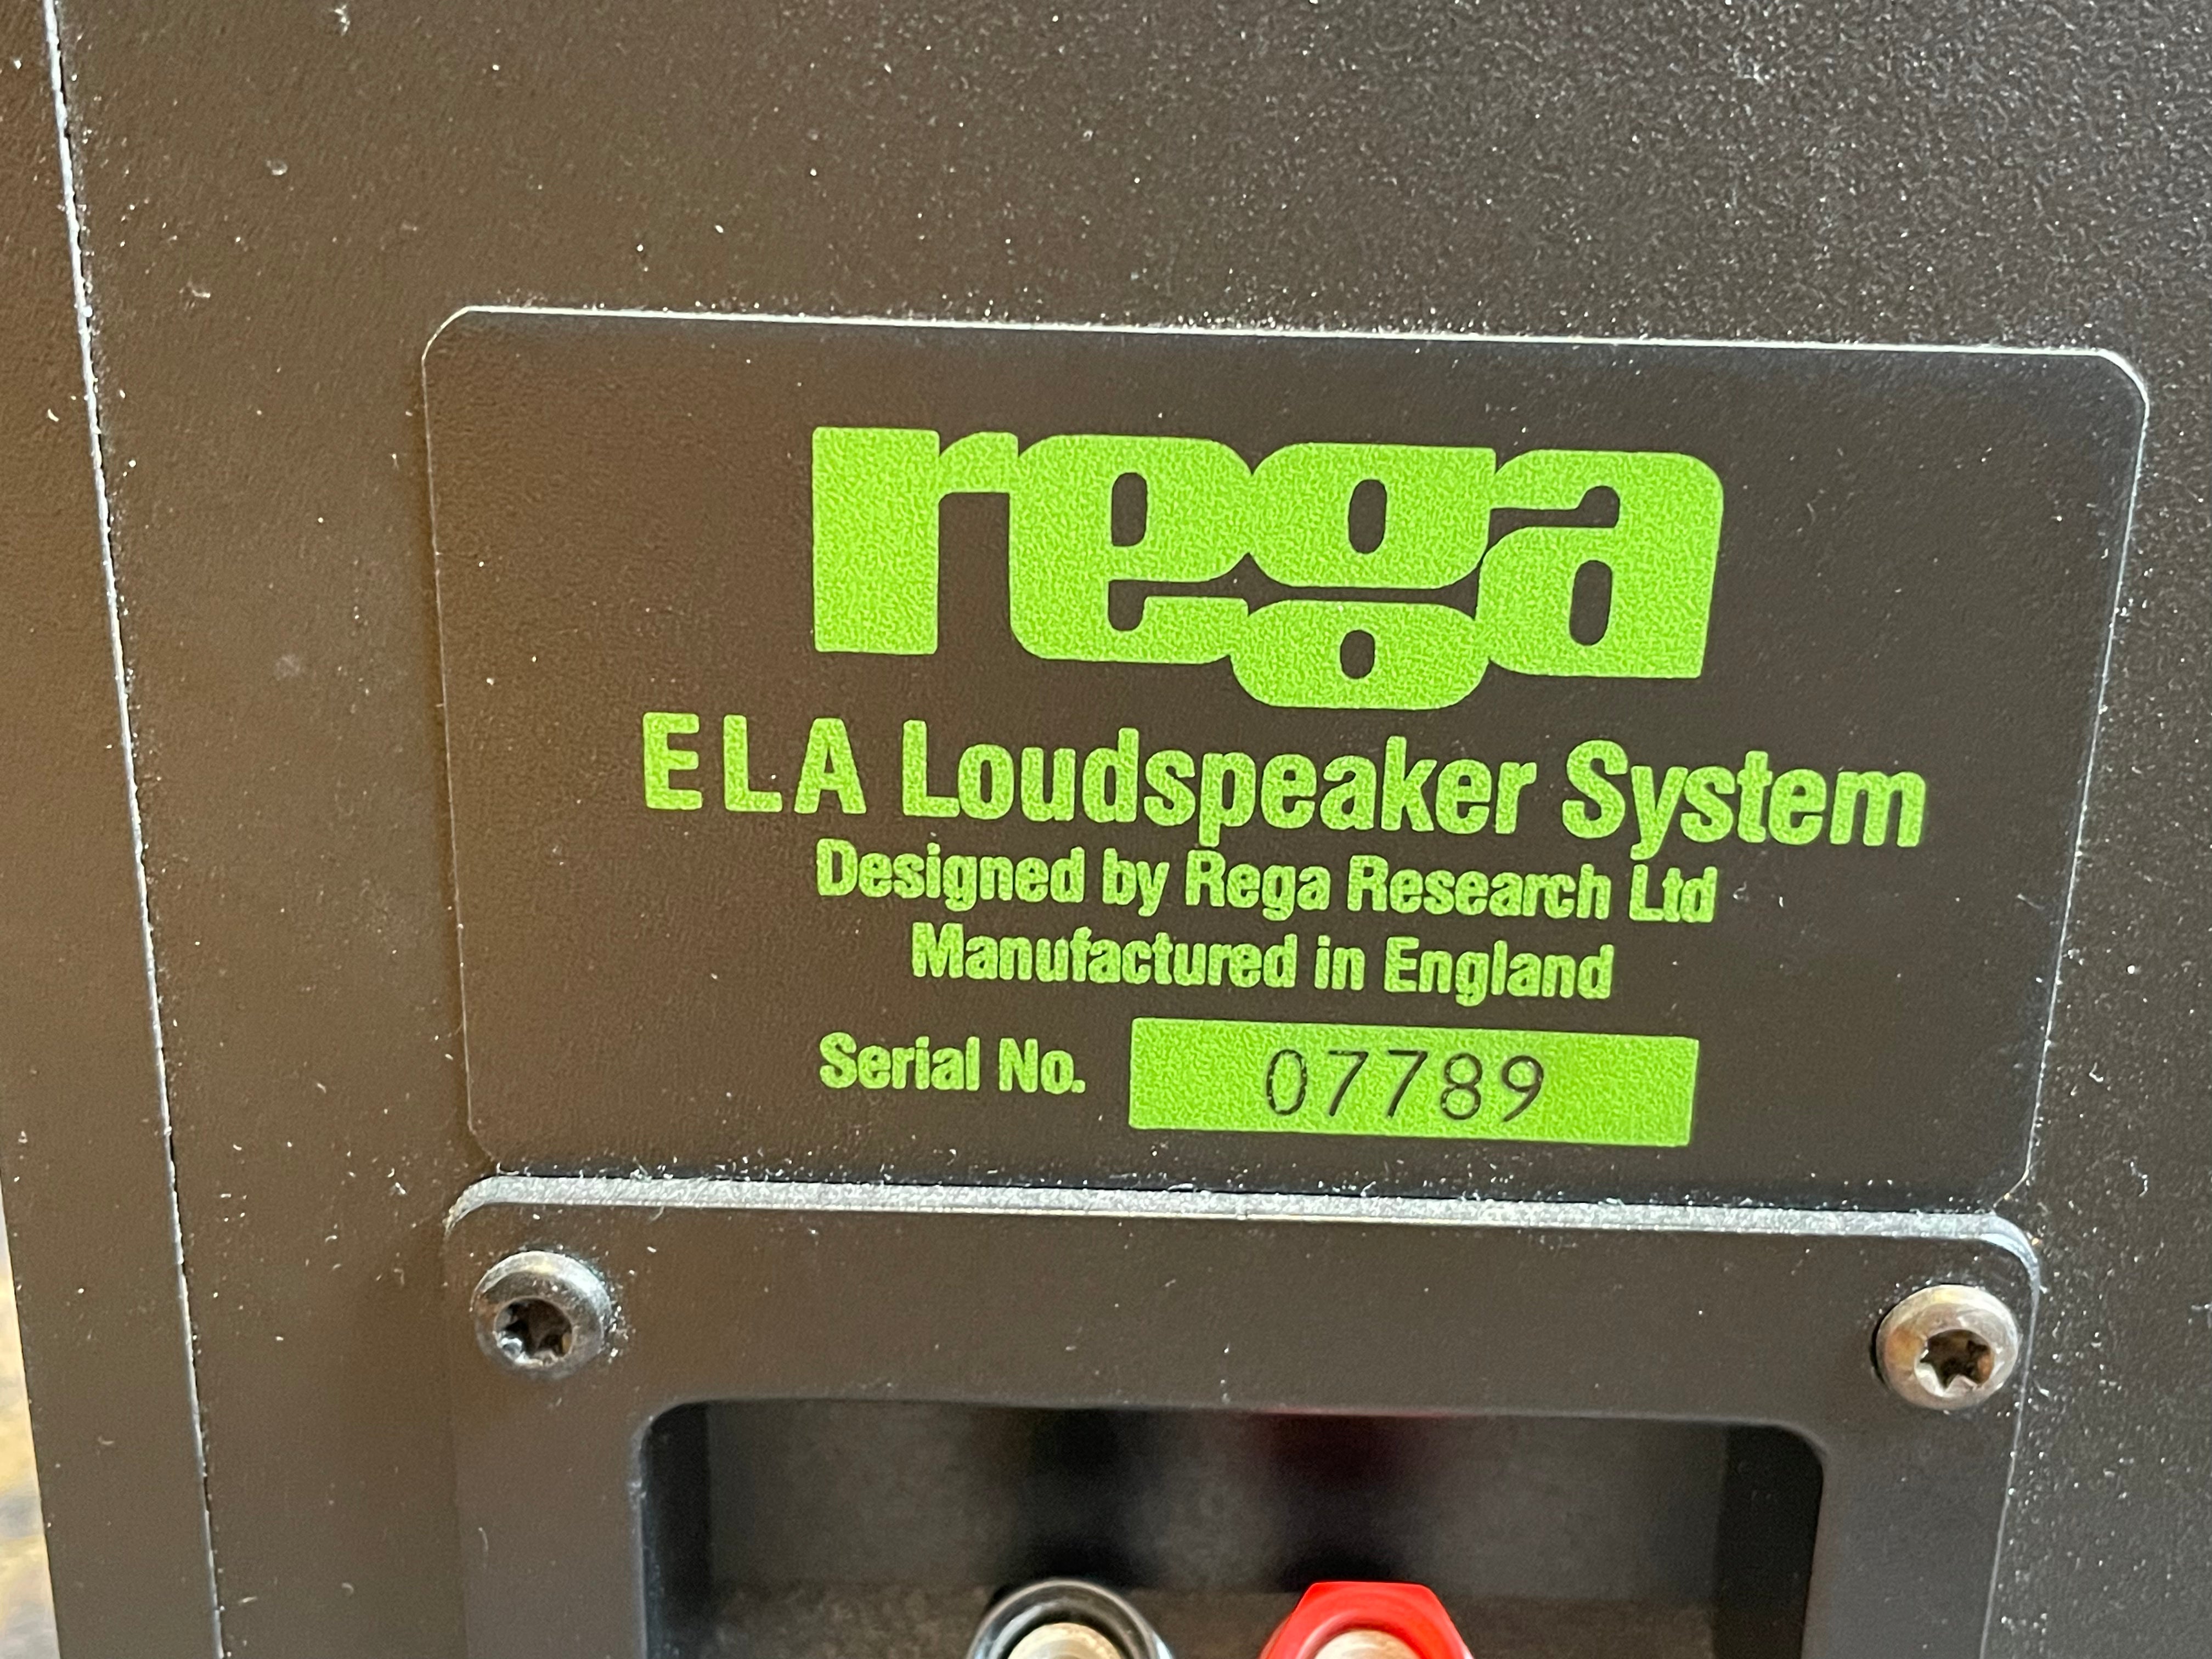 Rega, ELA Series One "Rare Shockingly Great Small Towers"